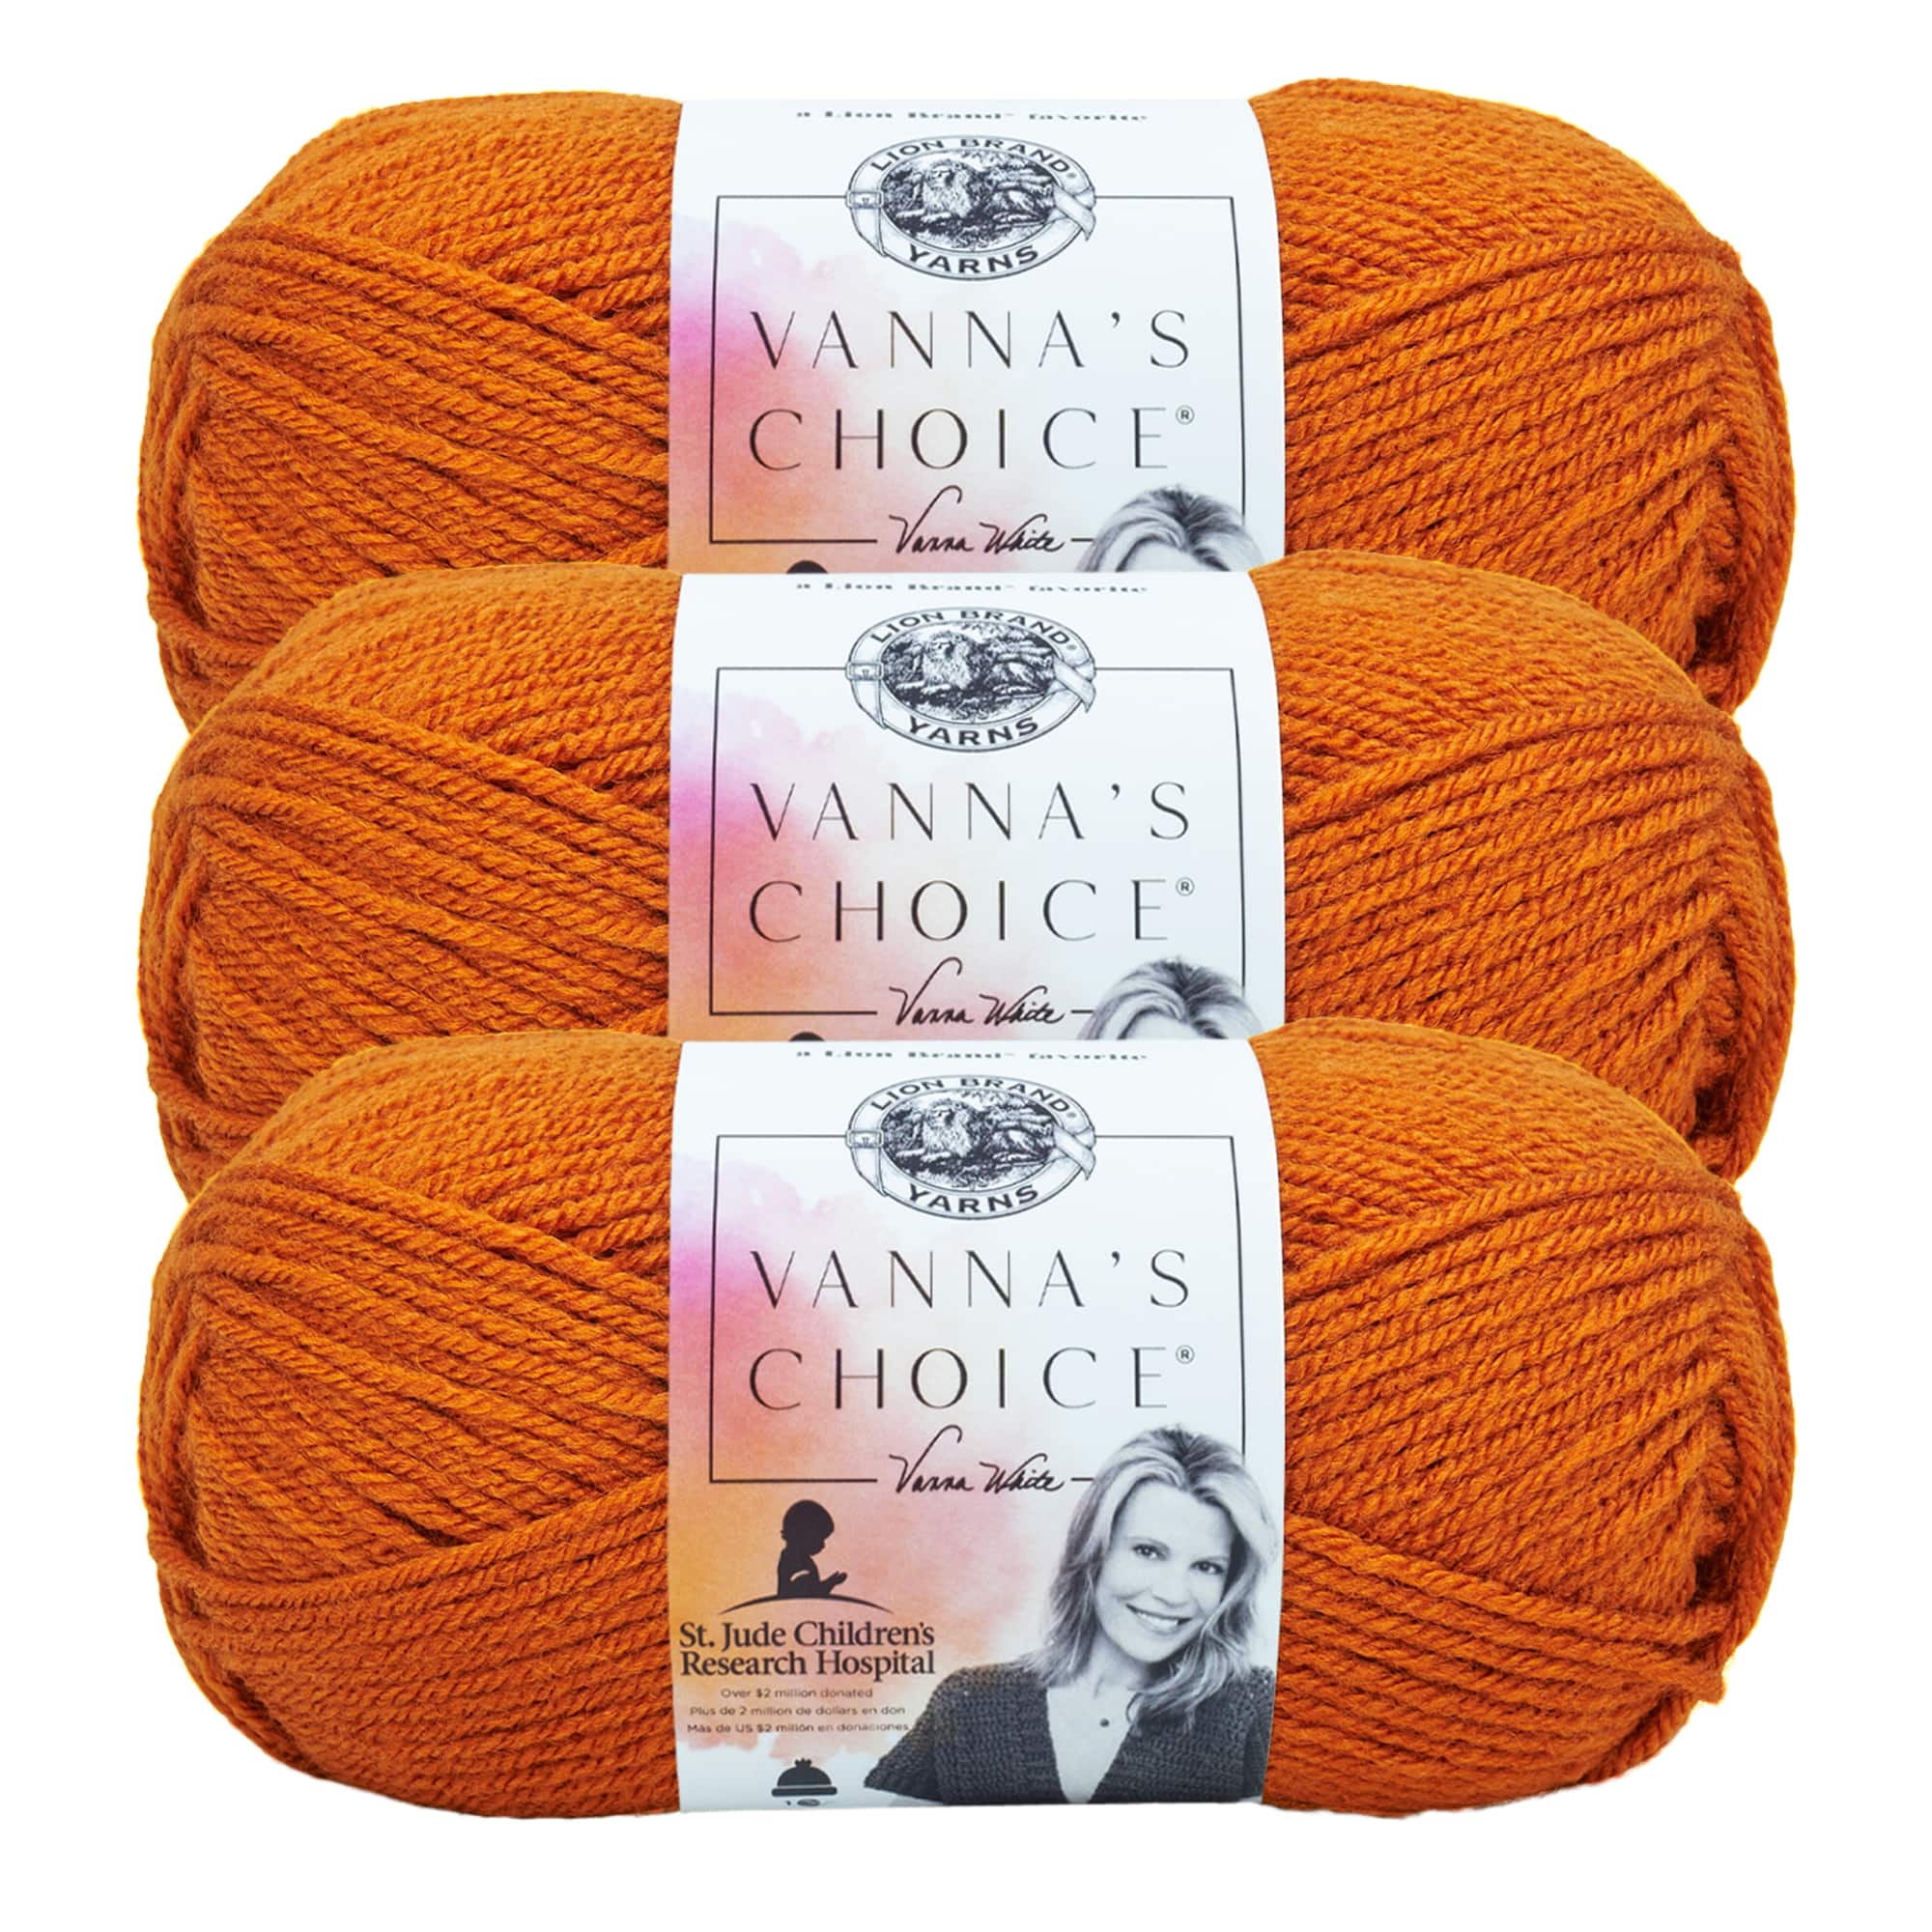 Lion Brand - Vanna's choice - yarn - coloe peacock - discontinued